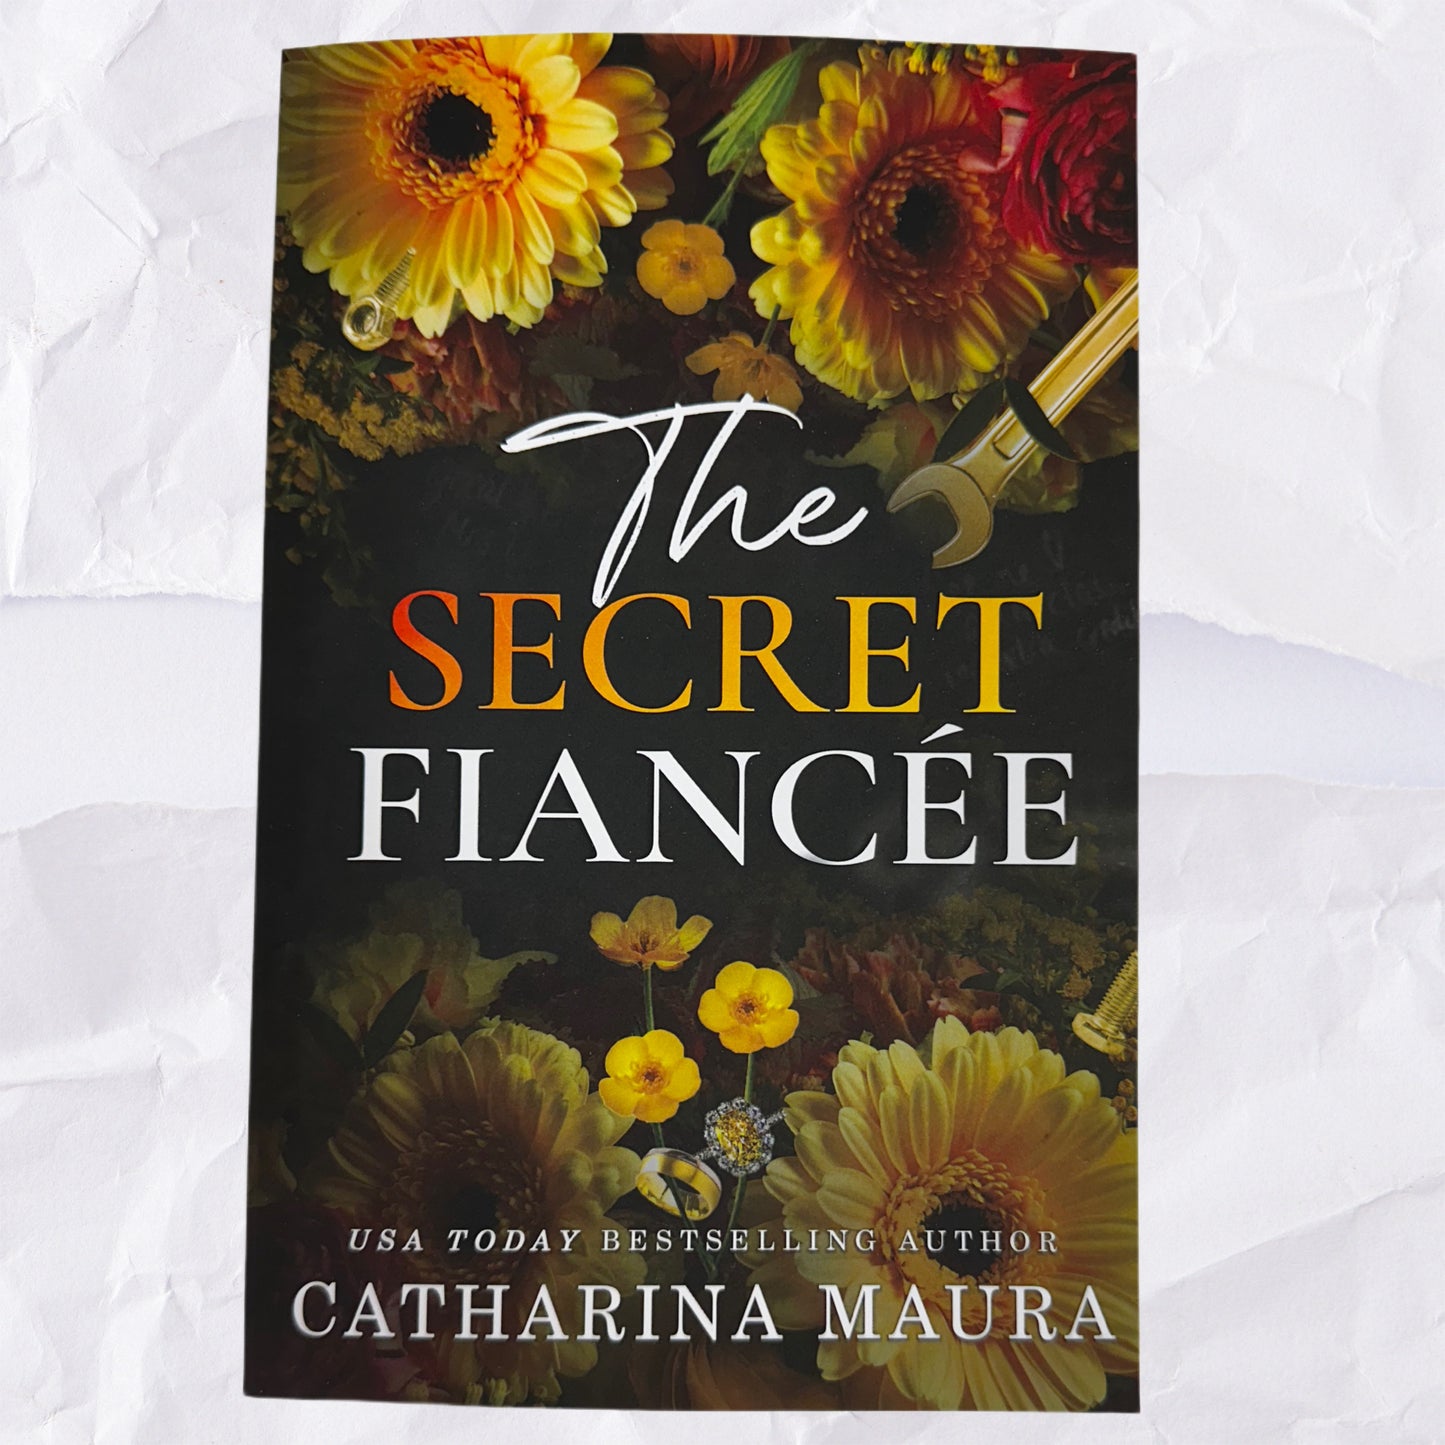 The Secret Fiancée (The Windsors #5) by Catharina Maura